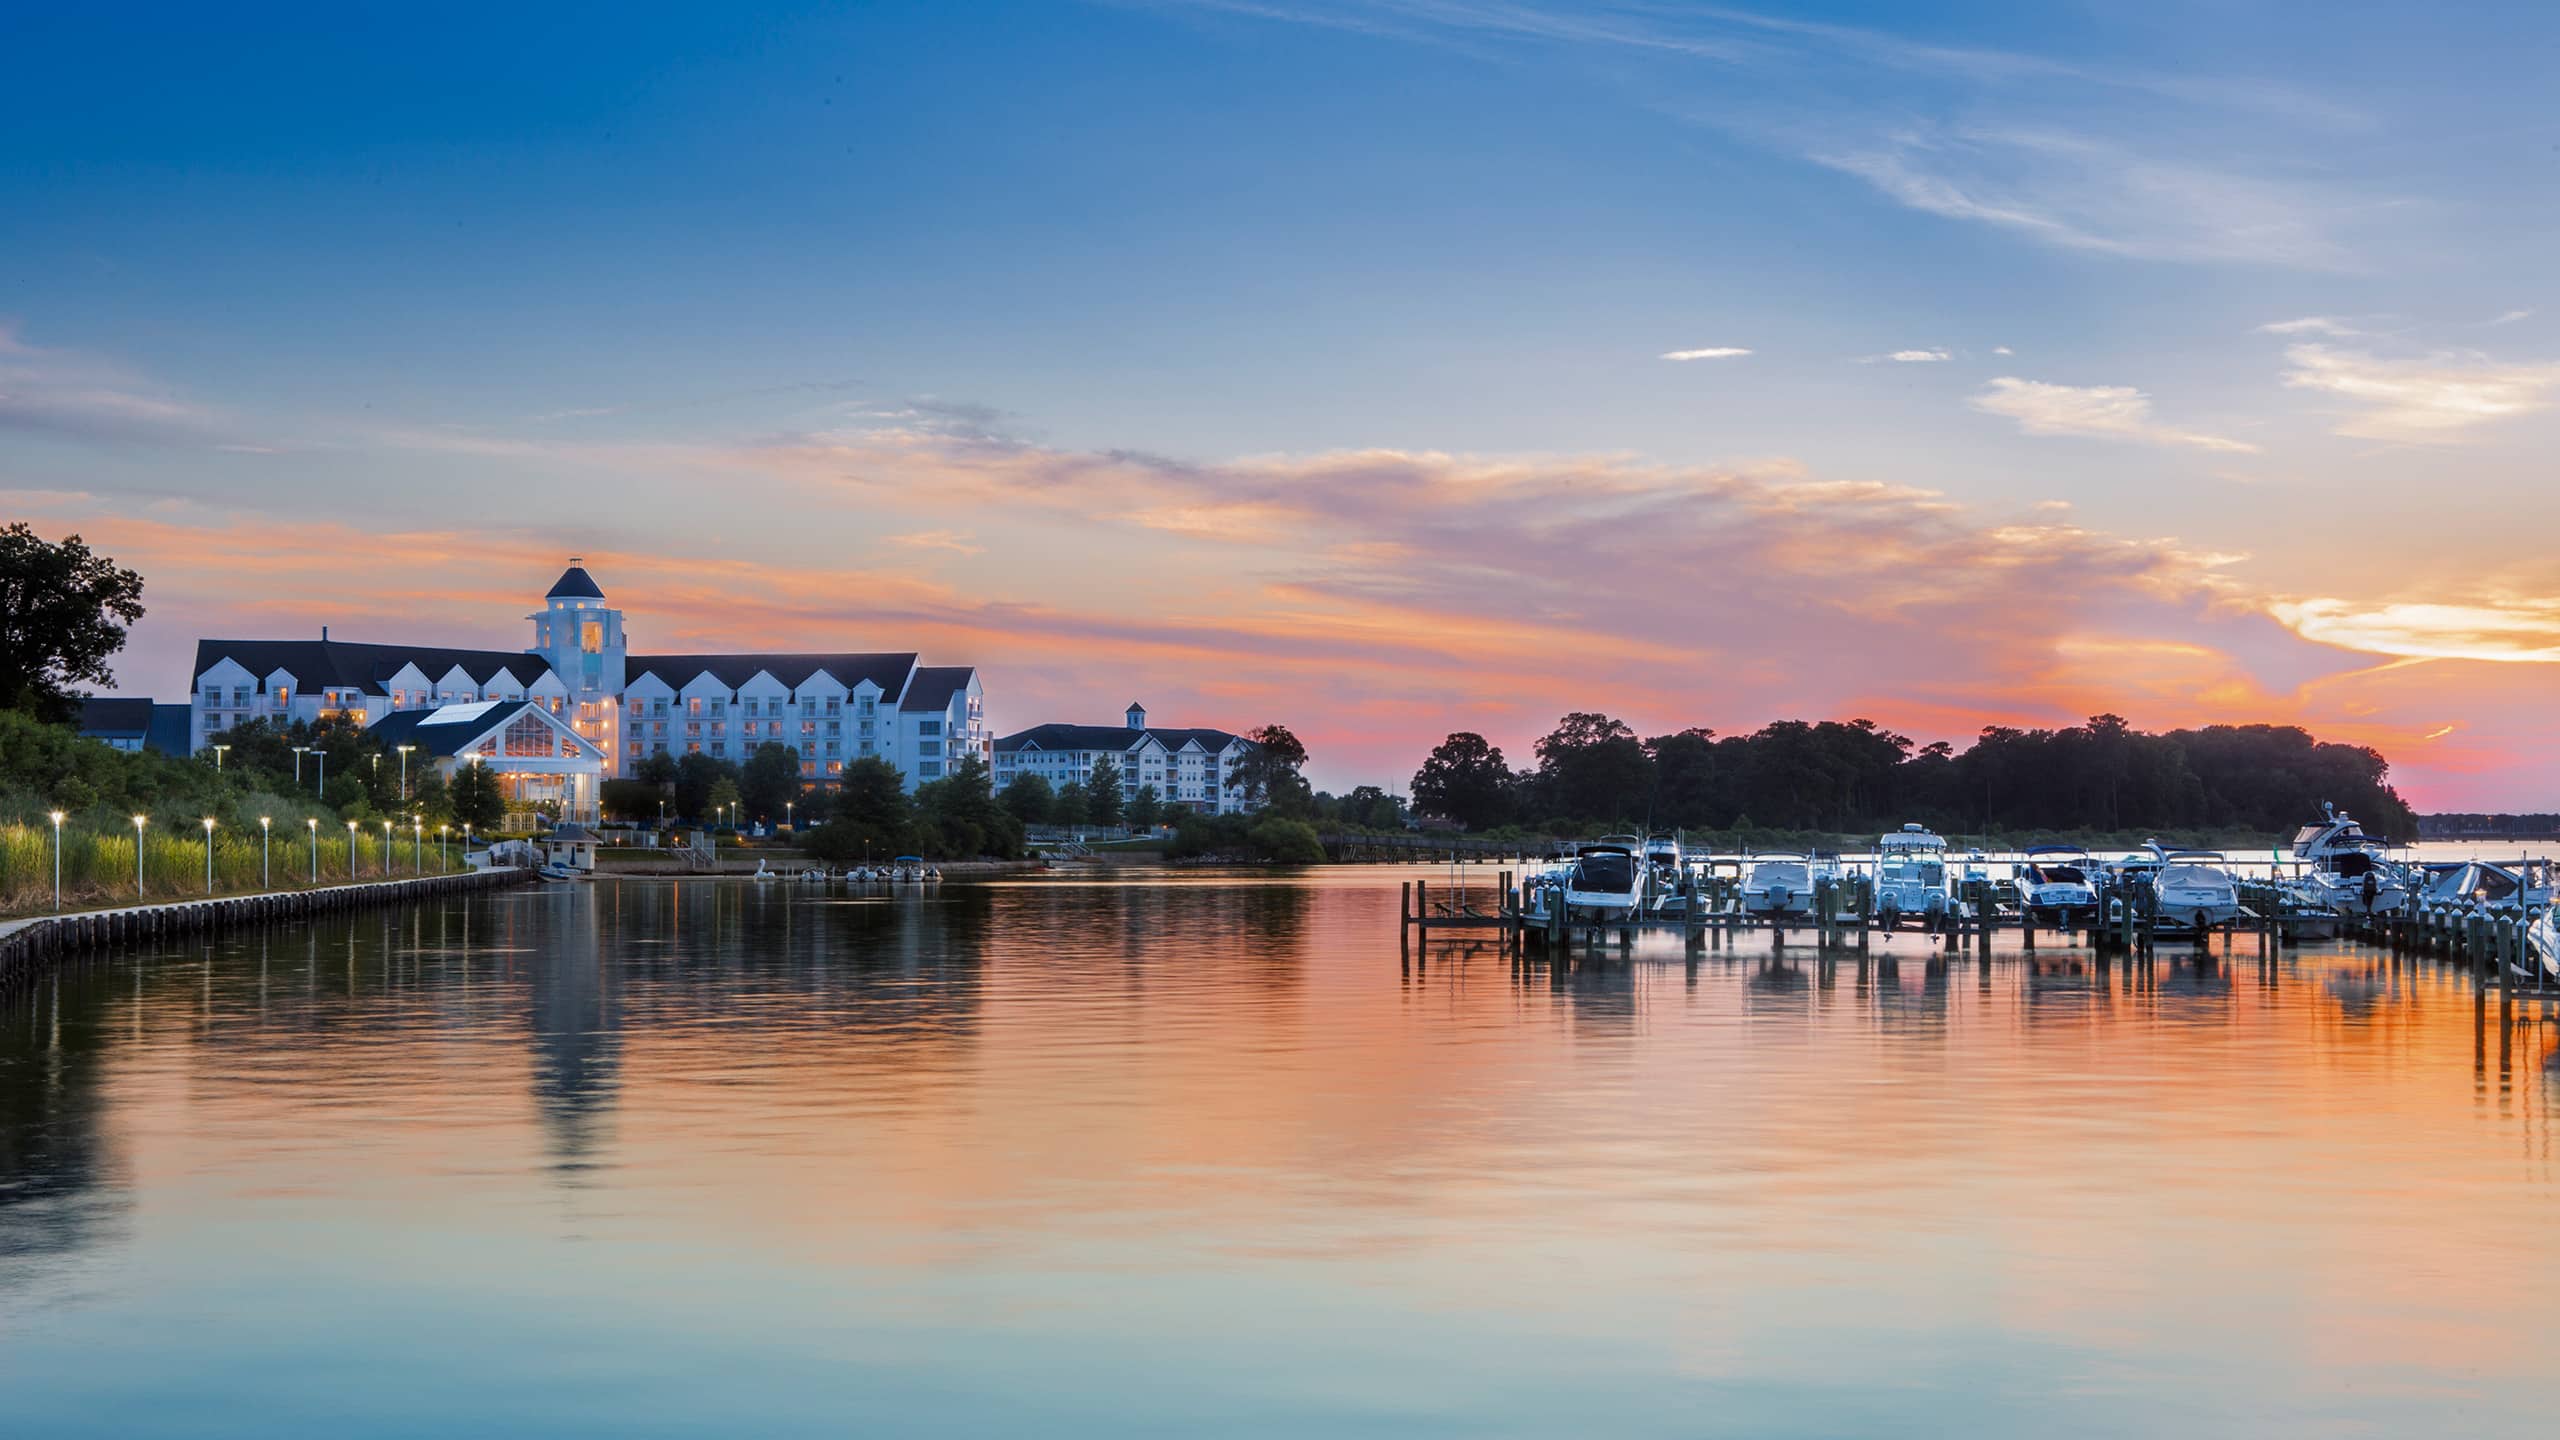 Hyatt Regency Chesapeake Bay Golf Resort, Spa and Marina Resort at Sunset